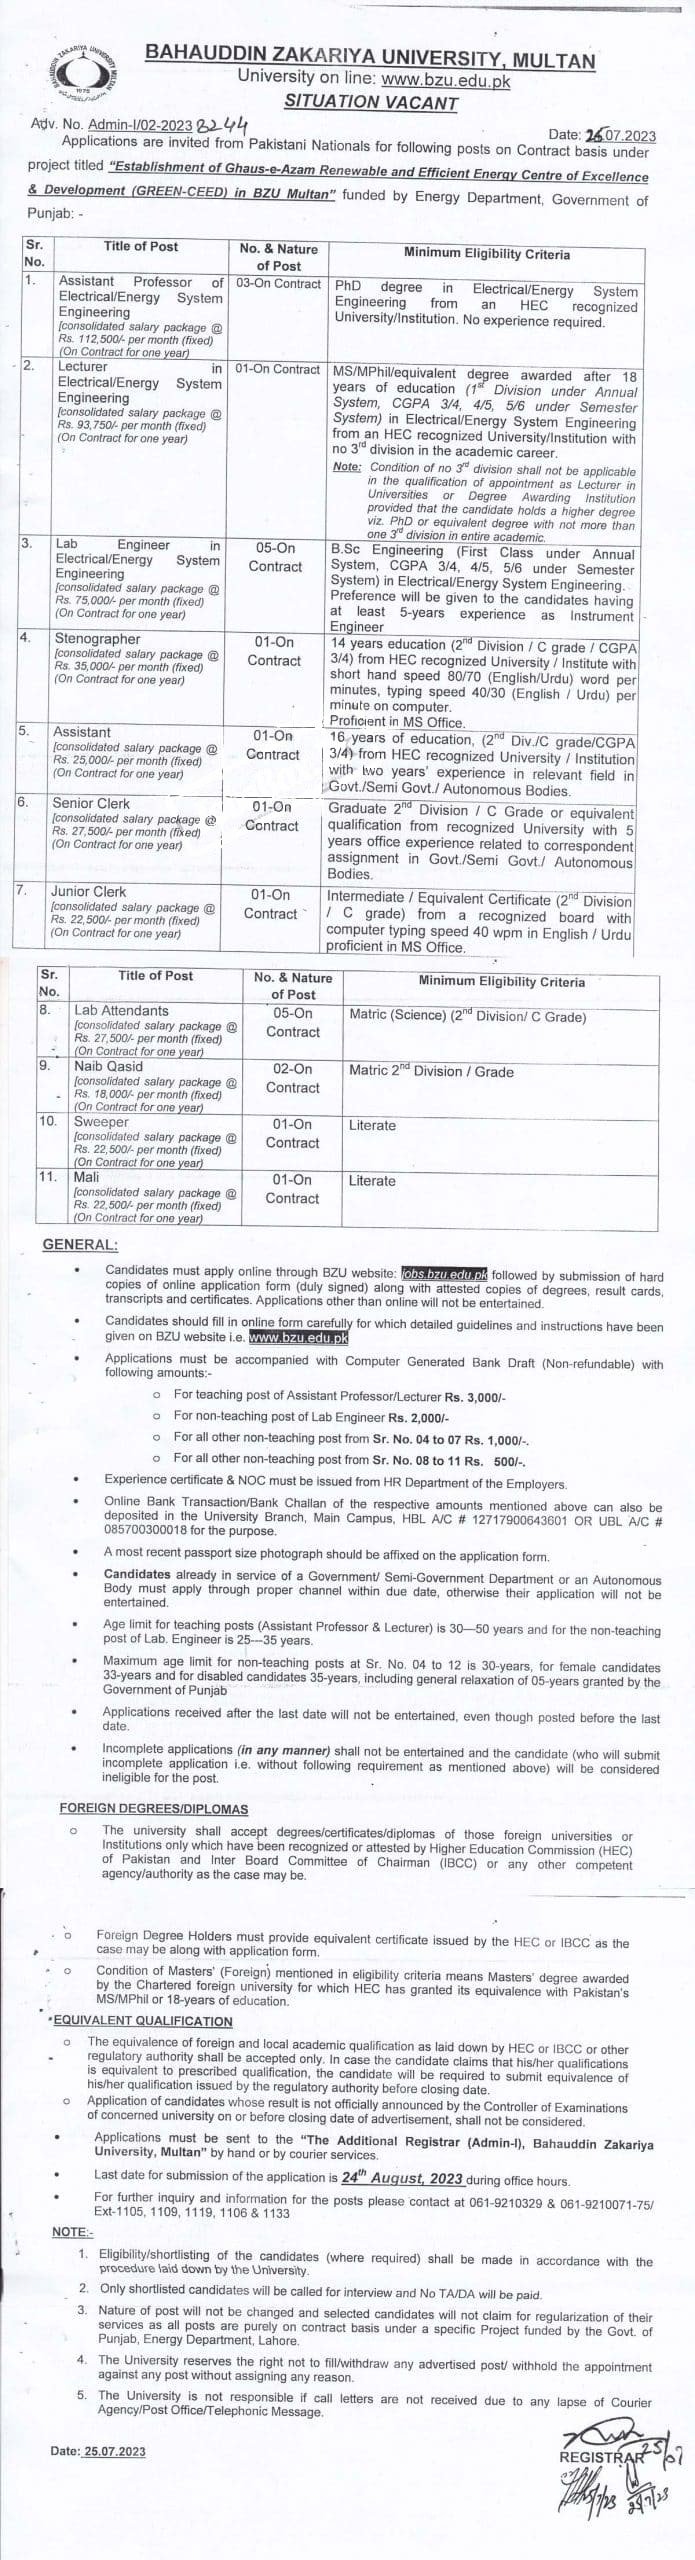 BZU Multan Jobs August 2023 | Bahauddin Zakariya University Jobs